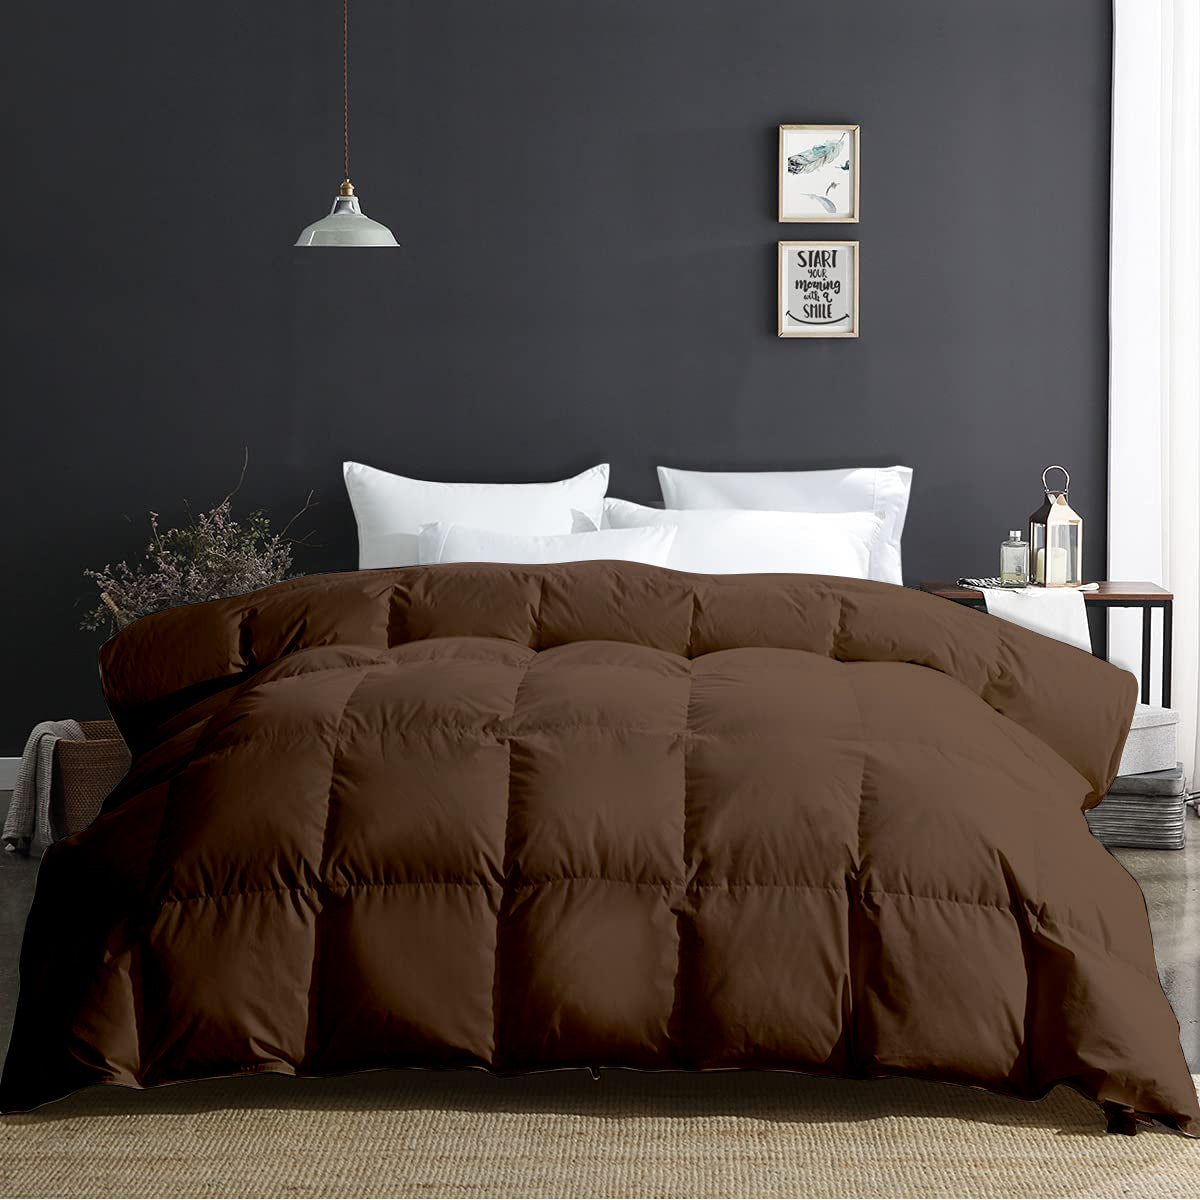 Razzai 500 GSM Winter Comforter Premium Collection Quilted Comforter |Chocolate Brown|Microfiber|lightweight